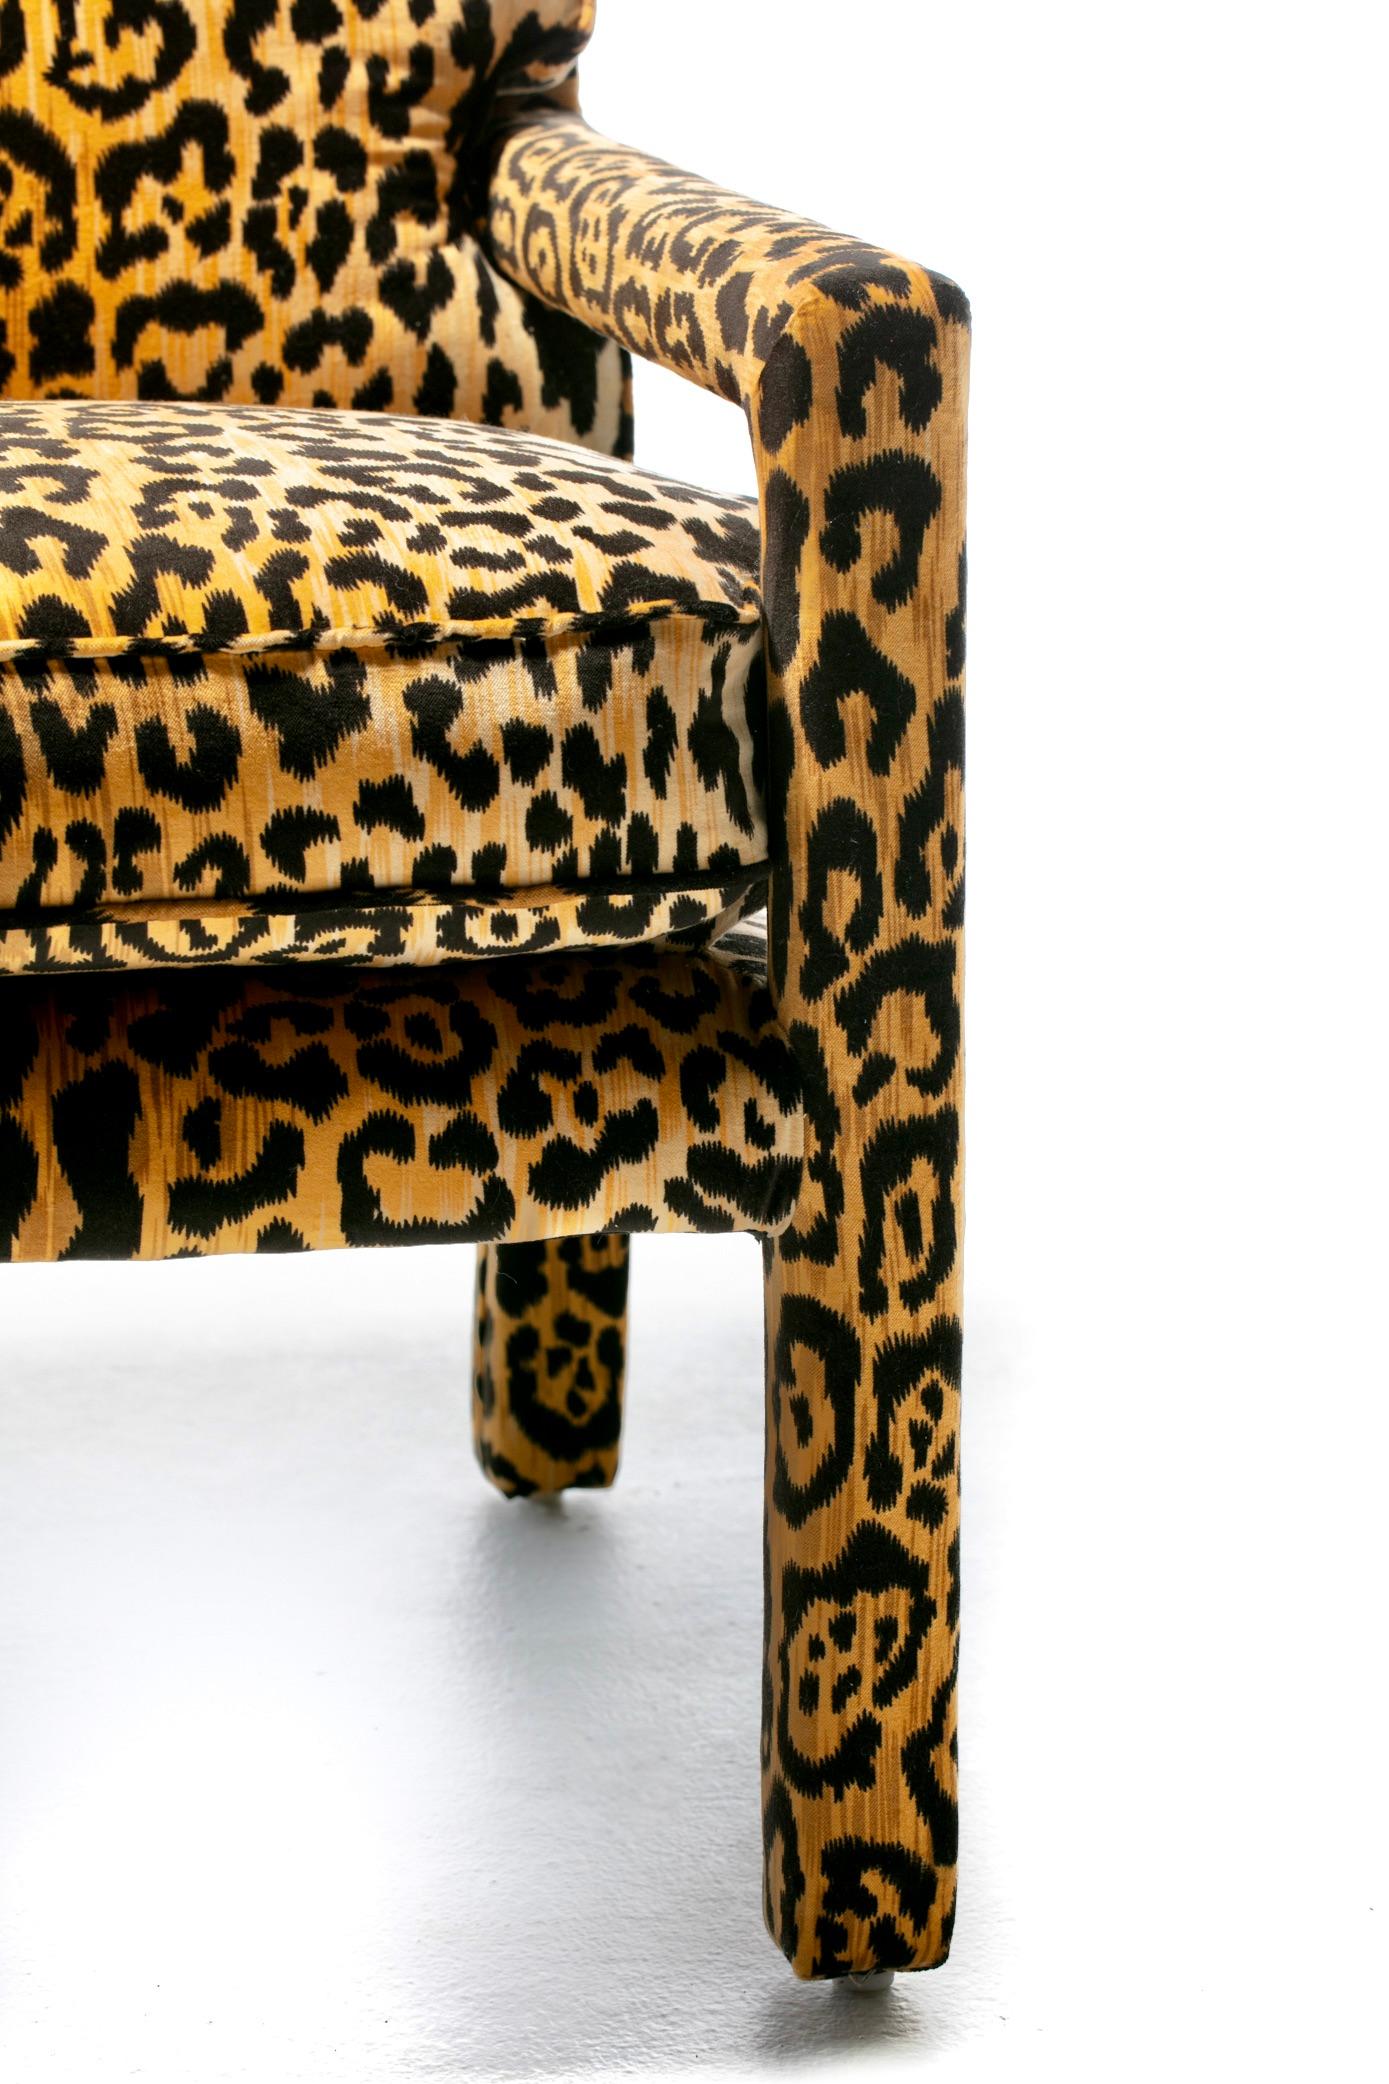  Milo Baughman Style Mid Century Parsons Chair in Leopard Velvet c. 1970 For Sale 4